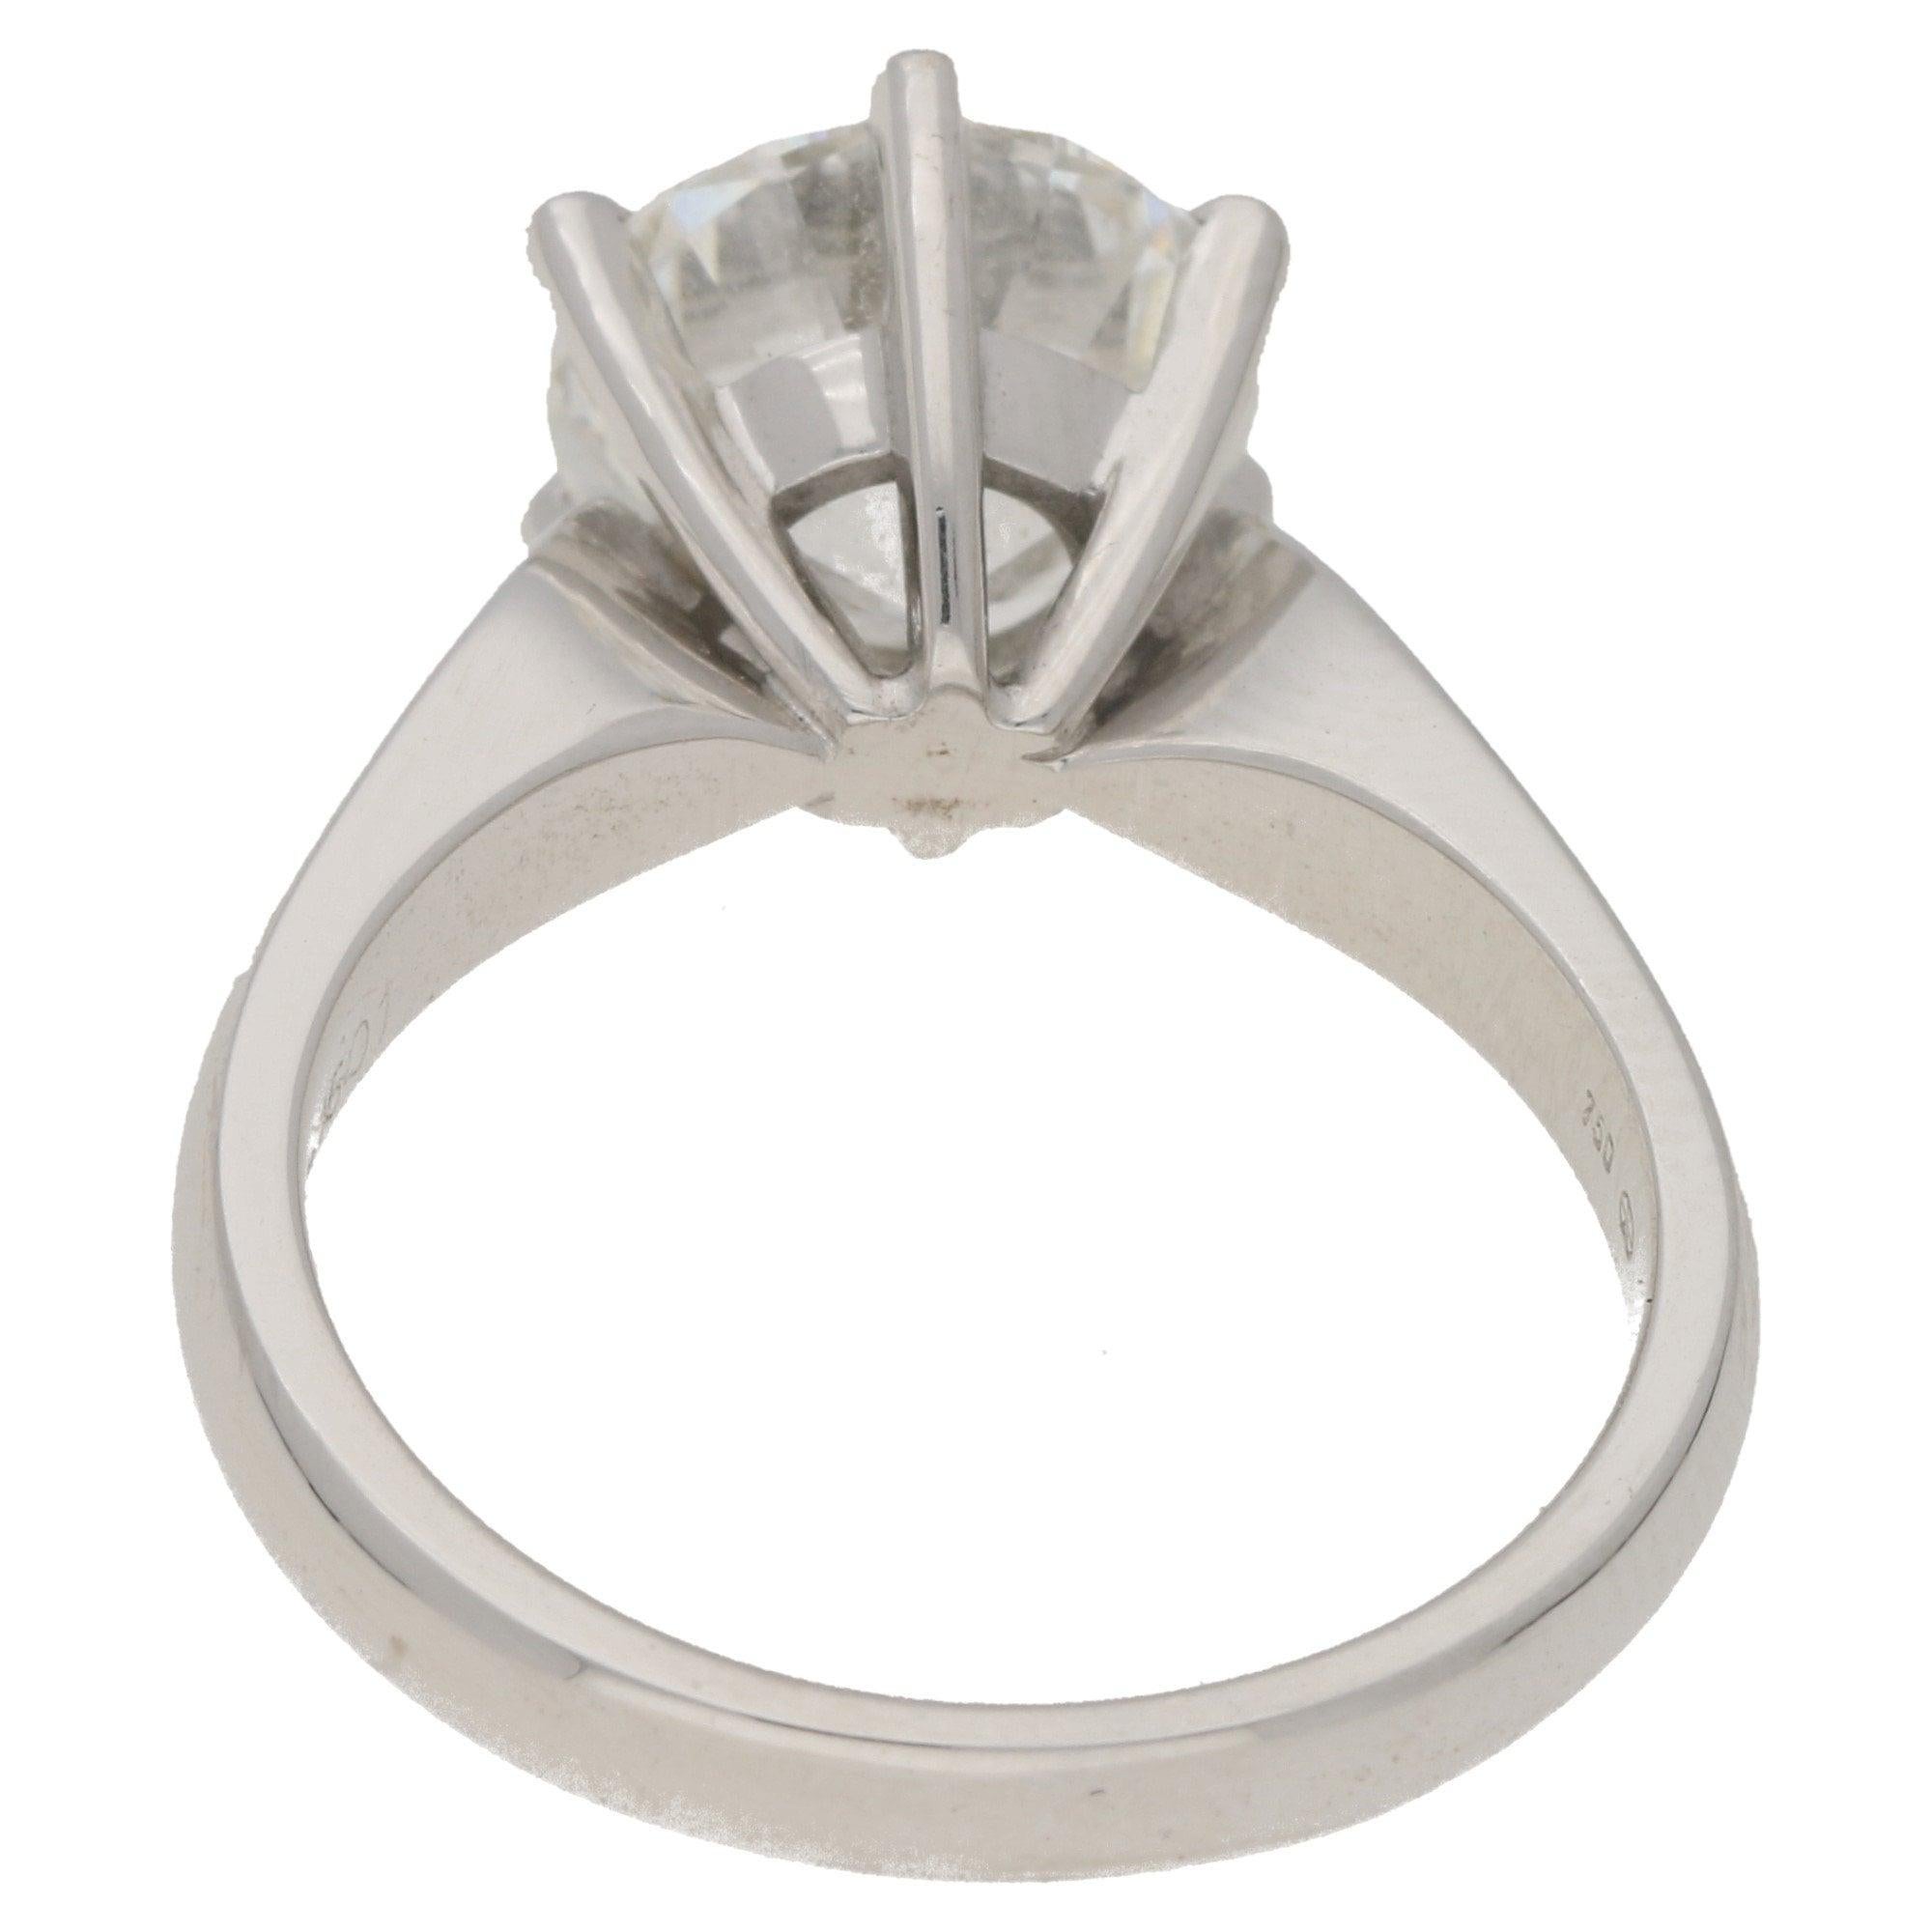 Women's or Men's GIA Certified 3.02 Carat Round Brilliant Cut Diamond Ring in White Gold